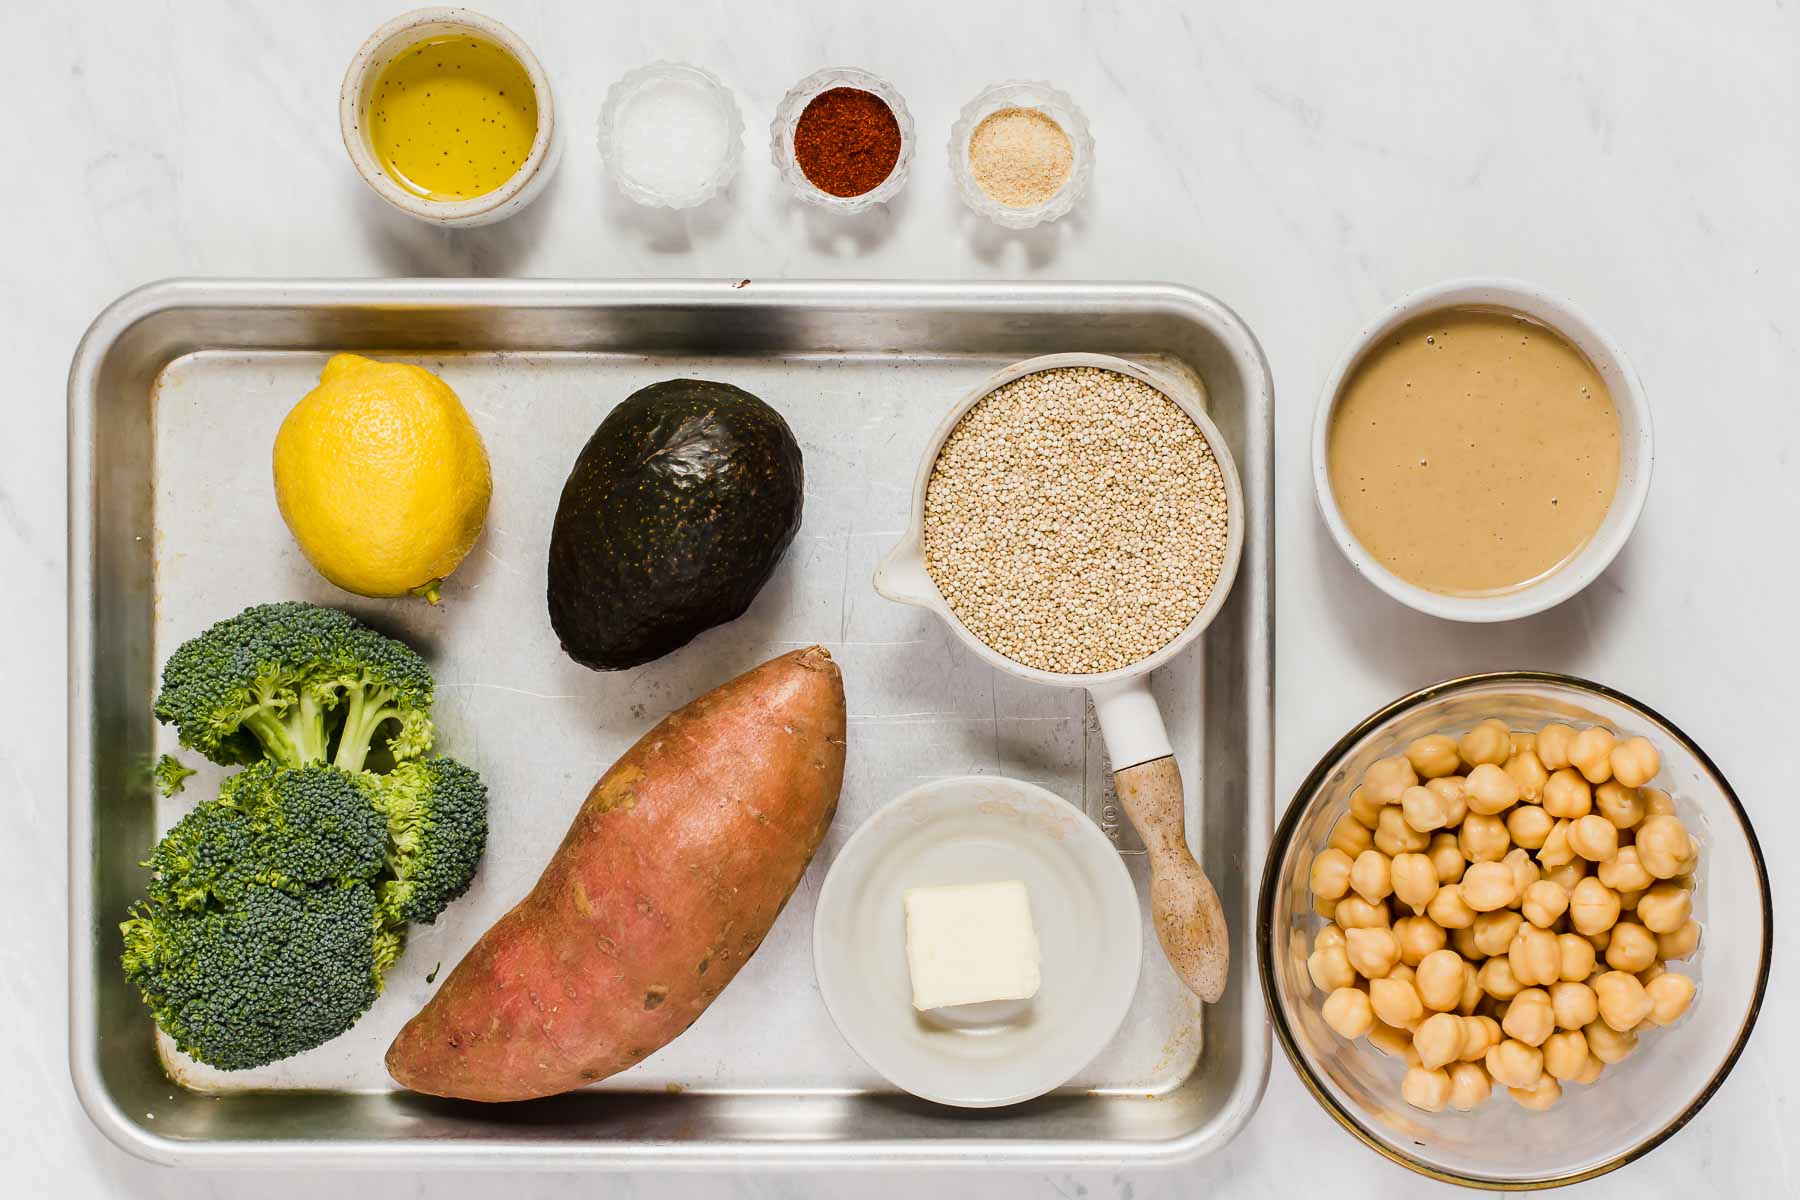 Sweet potato, broccoli, quinoa, chickpeas, and tahini on a sheet pan.